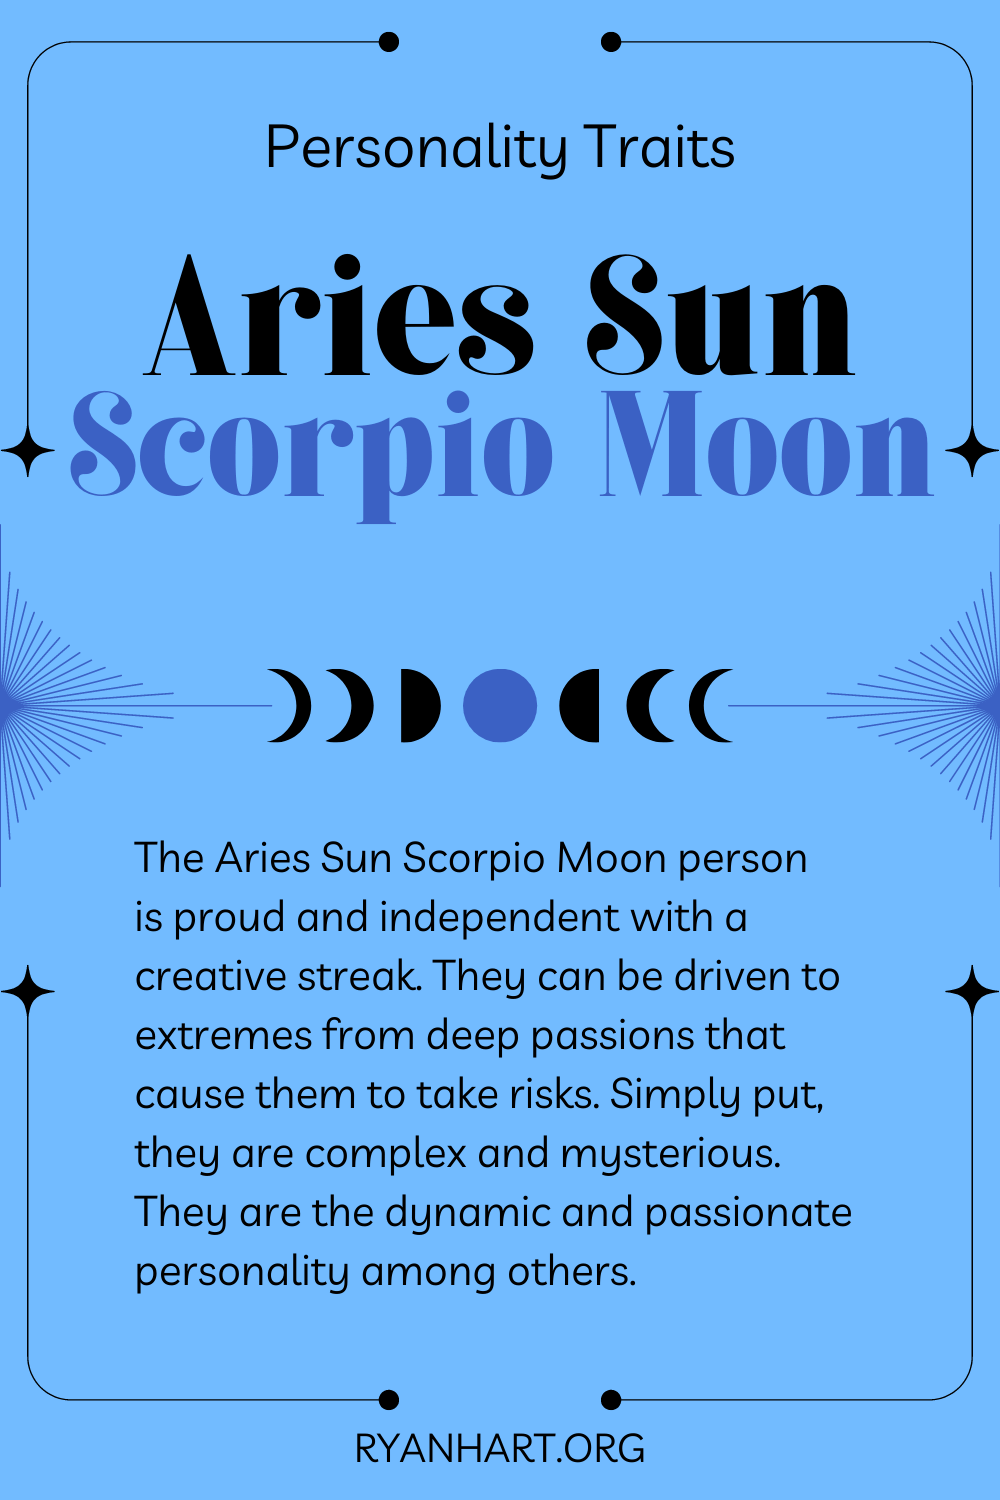 Aries Sun Scorpio Moon Description